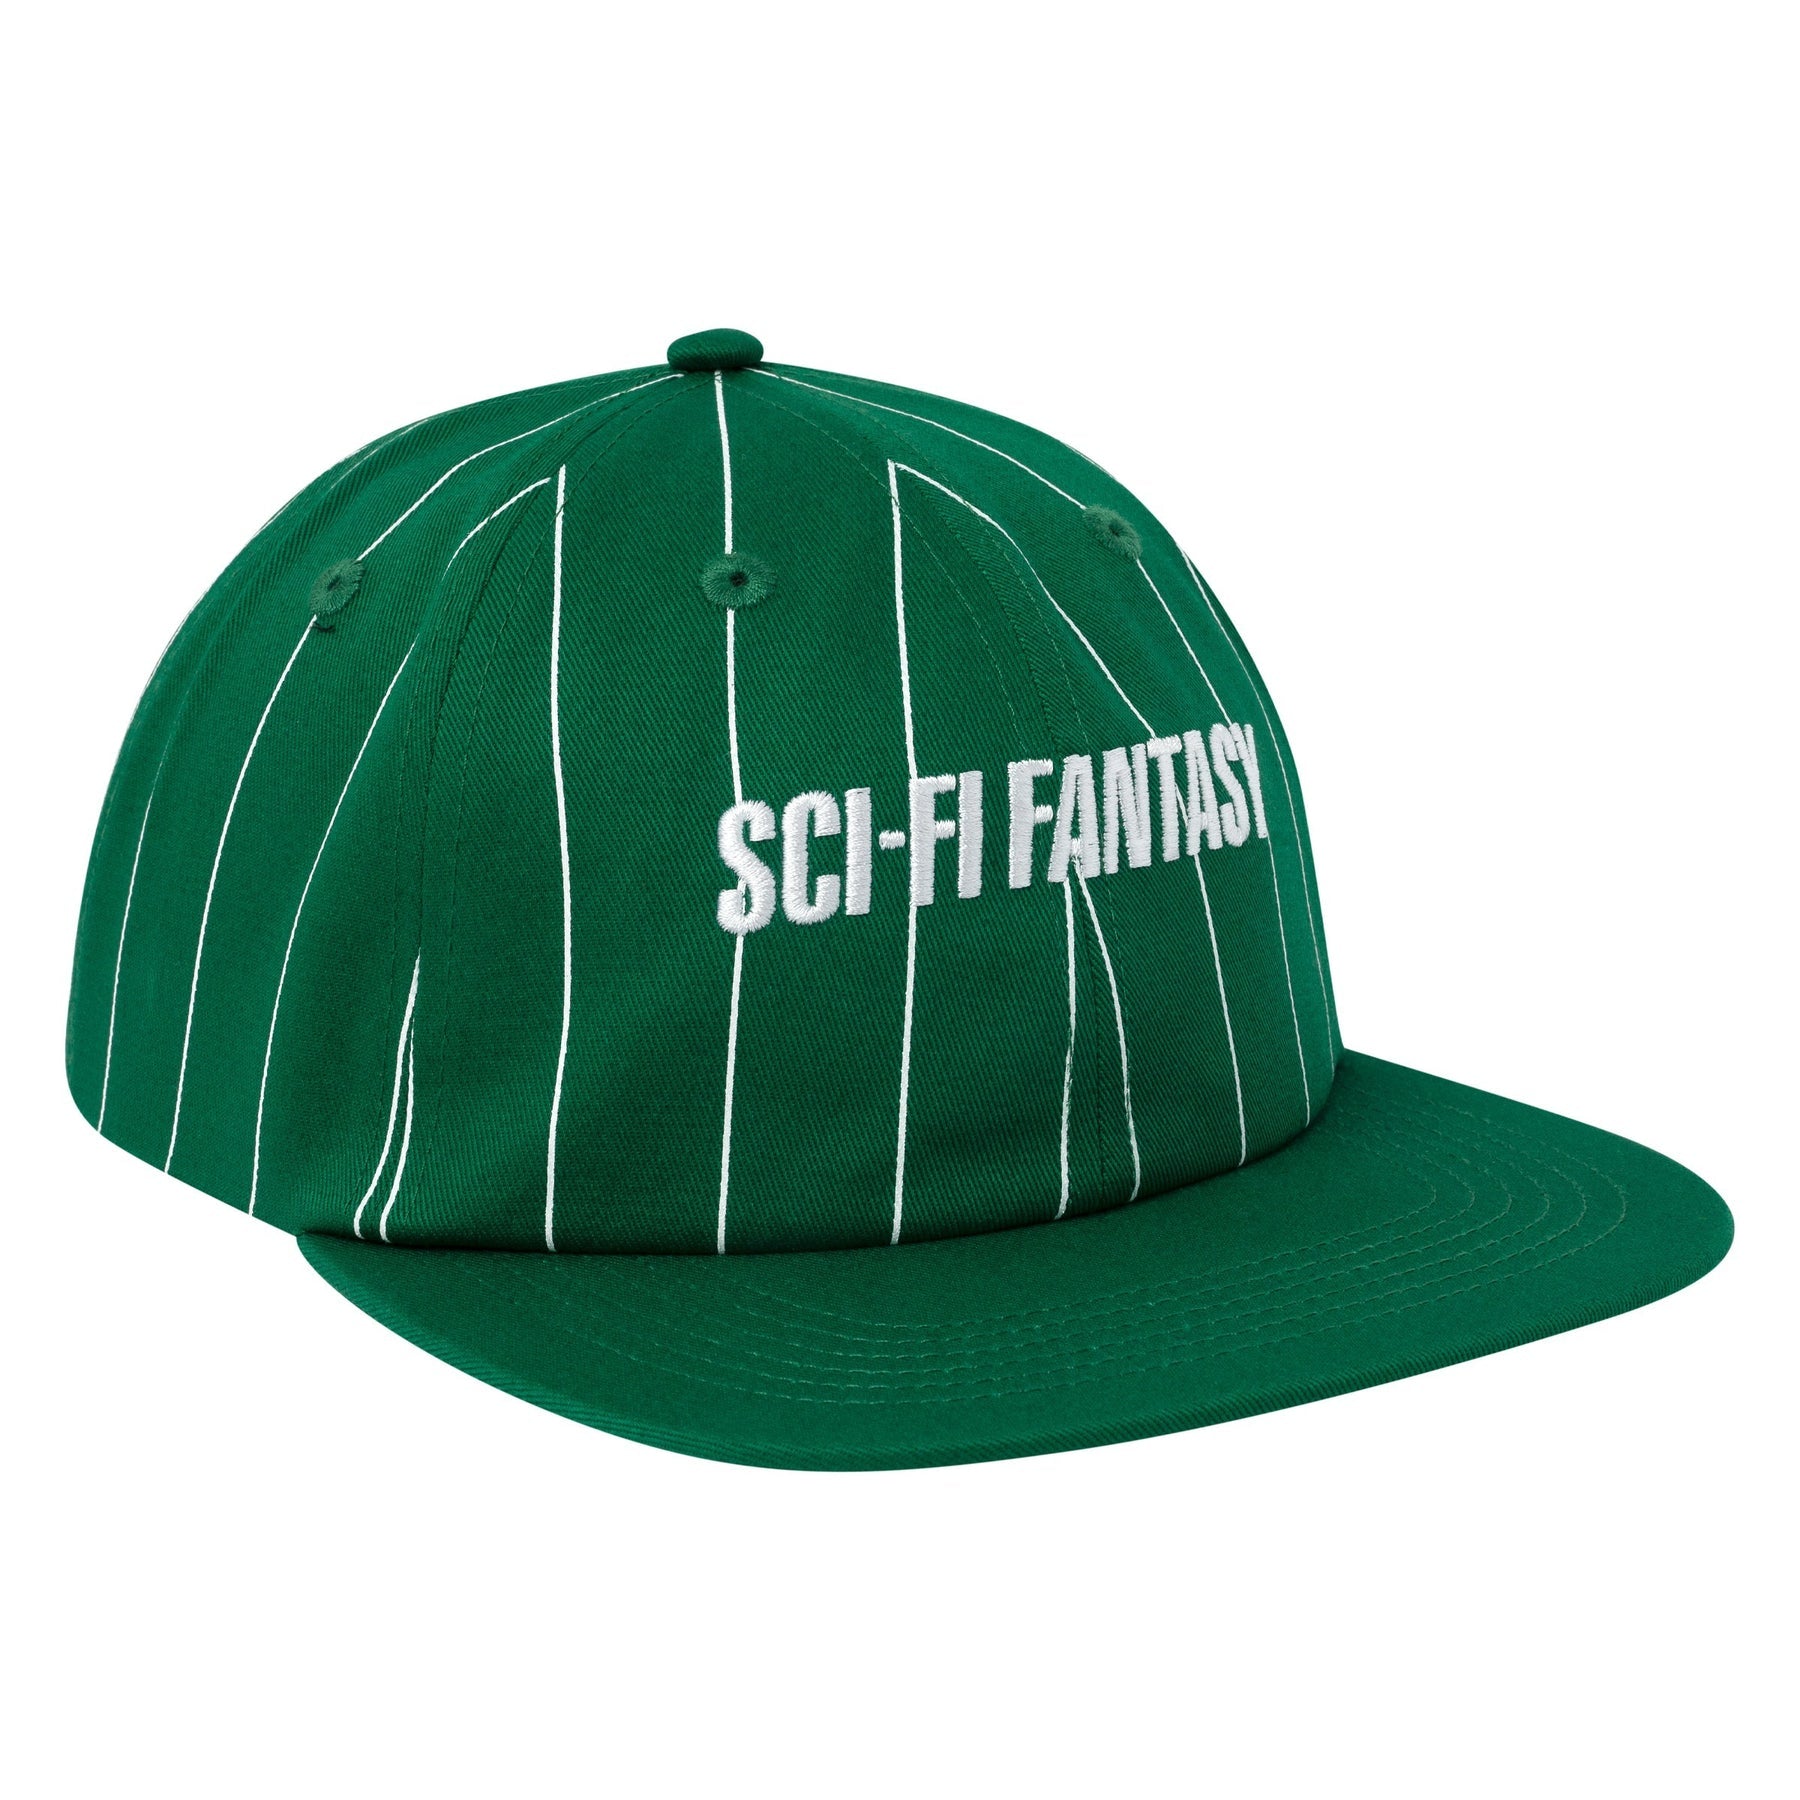 Sci-Fi Fantasy Fast Stripe Snapback Hat (Green) - Apple Valley Emporium